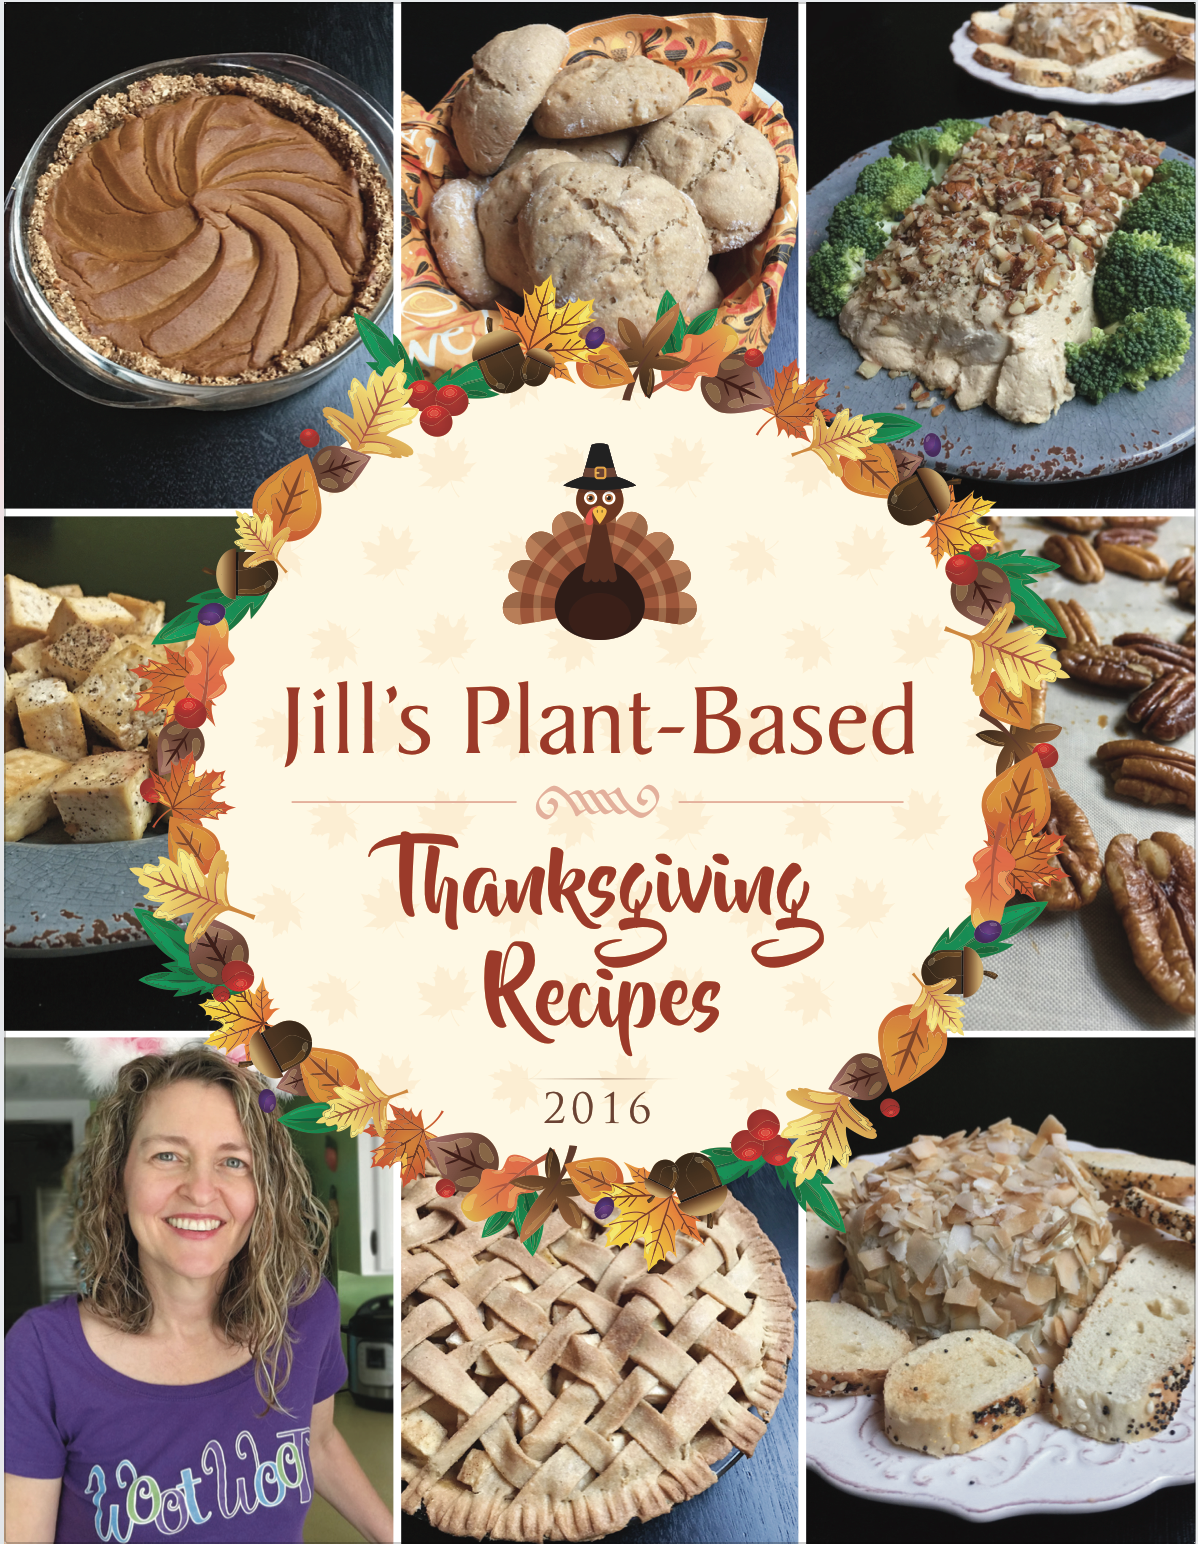 Jill's Plant-Based Thanksgiving Recipes 2016